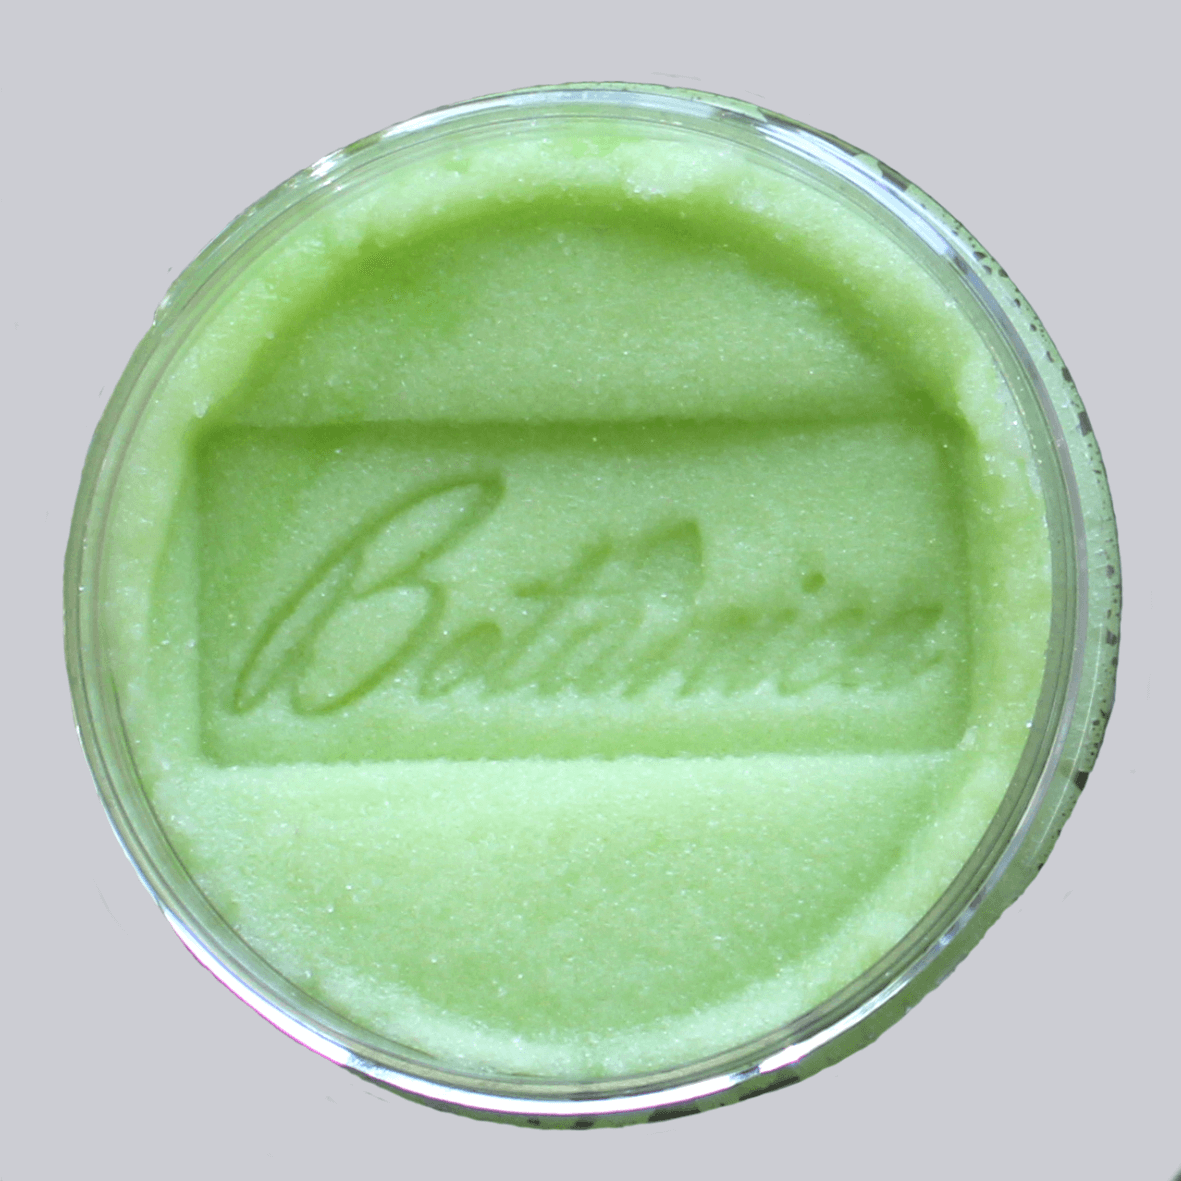 Open jar of sugar body scrub showing the texture, stamped "Botanica" AlpacaSoaps Alpaca Soaps, Soft green, Cucumber Melon